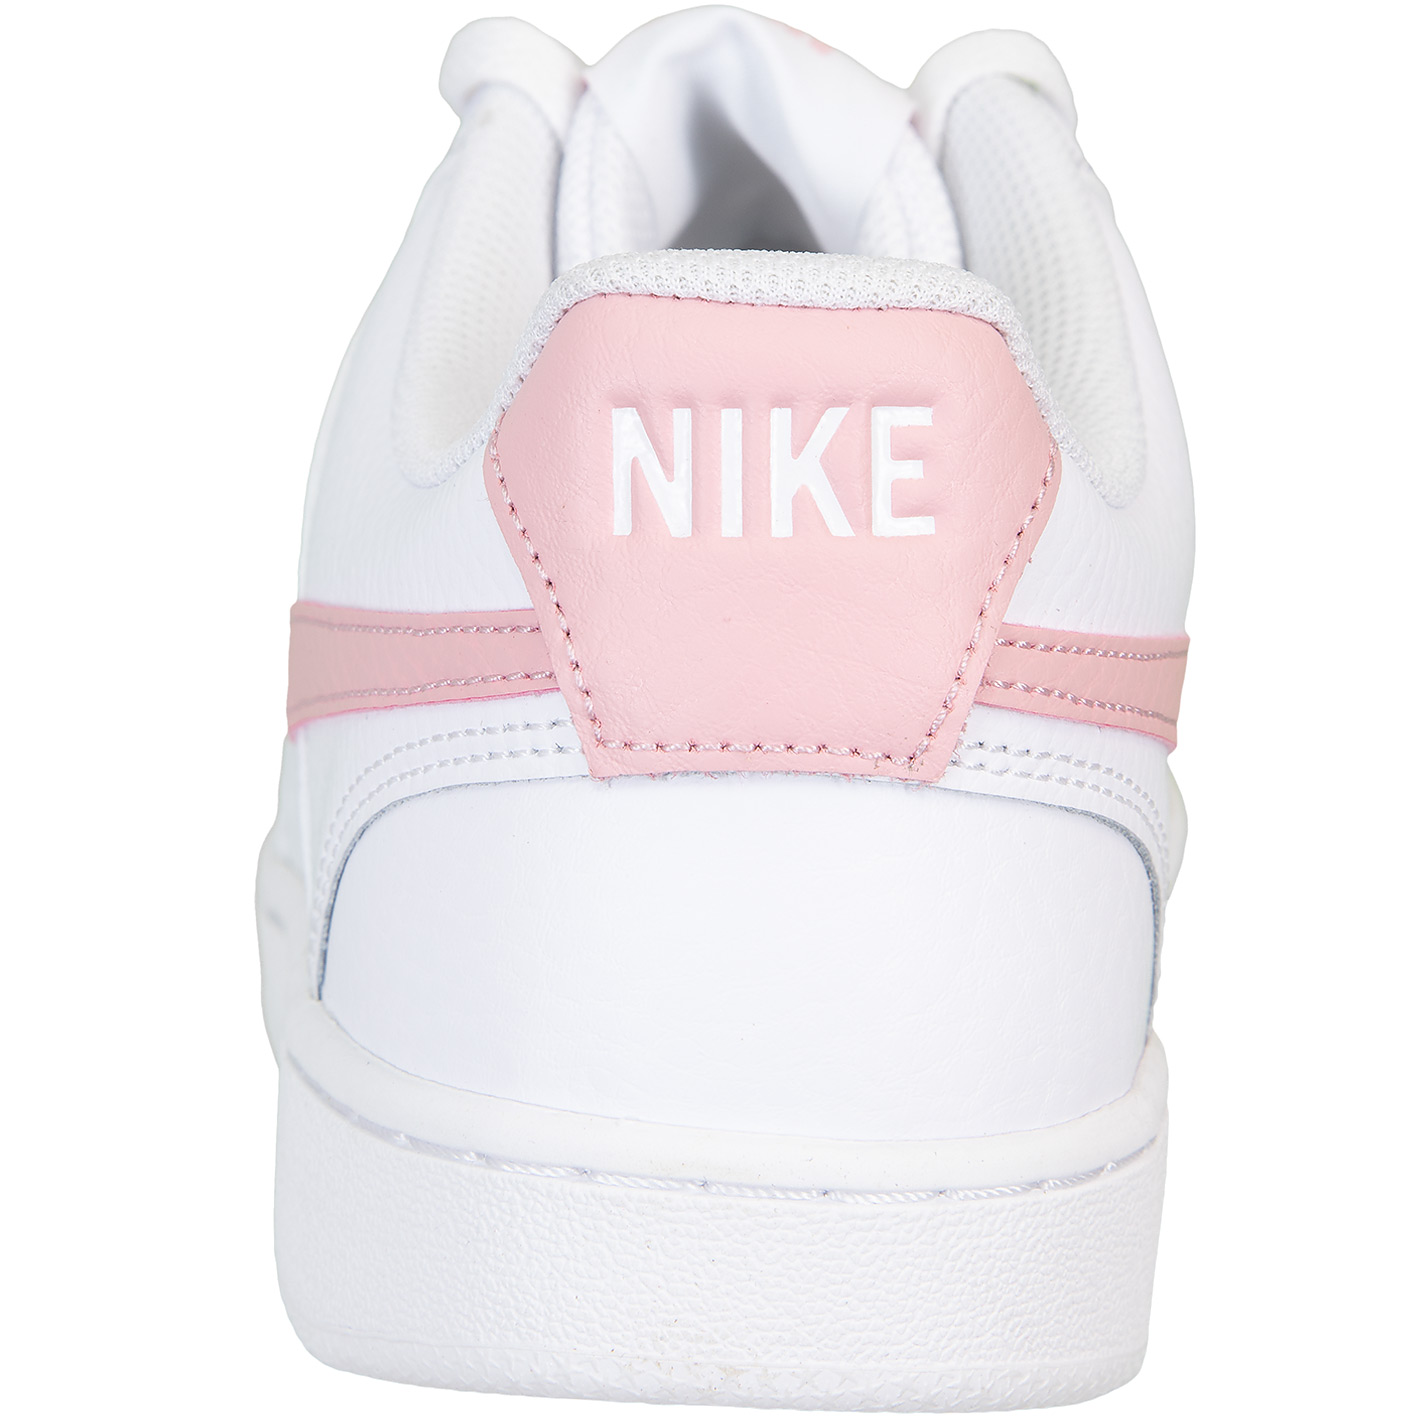 ☆ Nike Court Vision Low Damen Sneaker weiß/pink - hier bestellen!